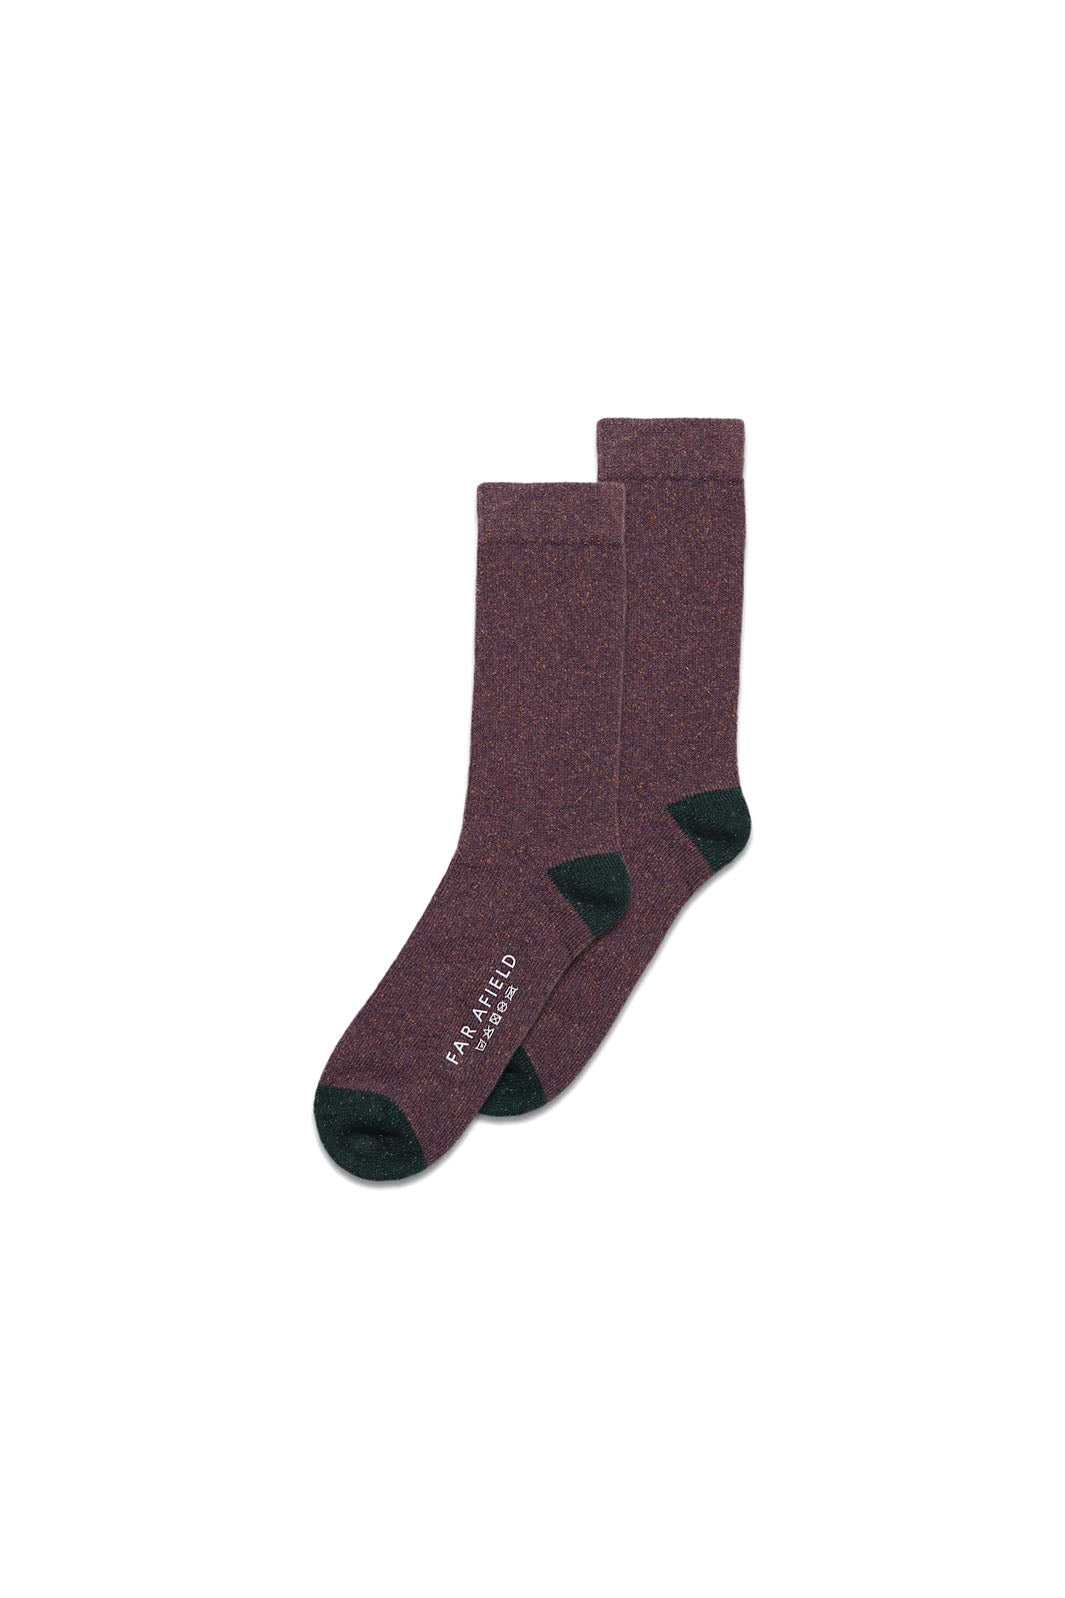 Deep purple textured socks with dark grey color block toe and heel. 